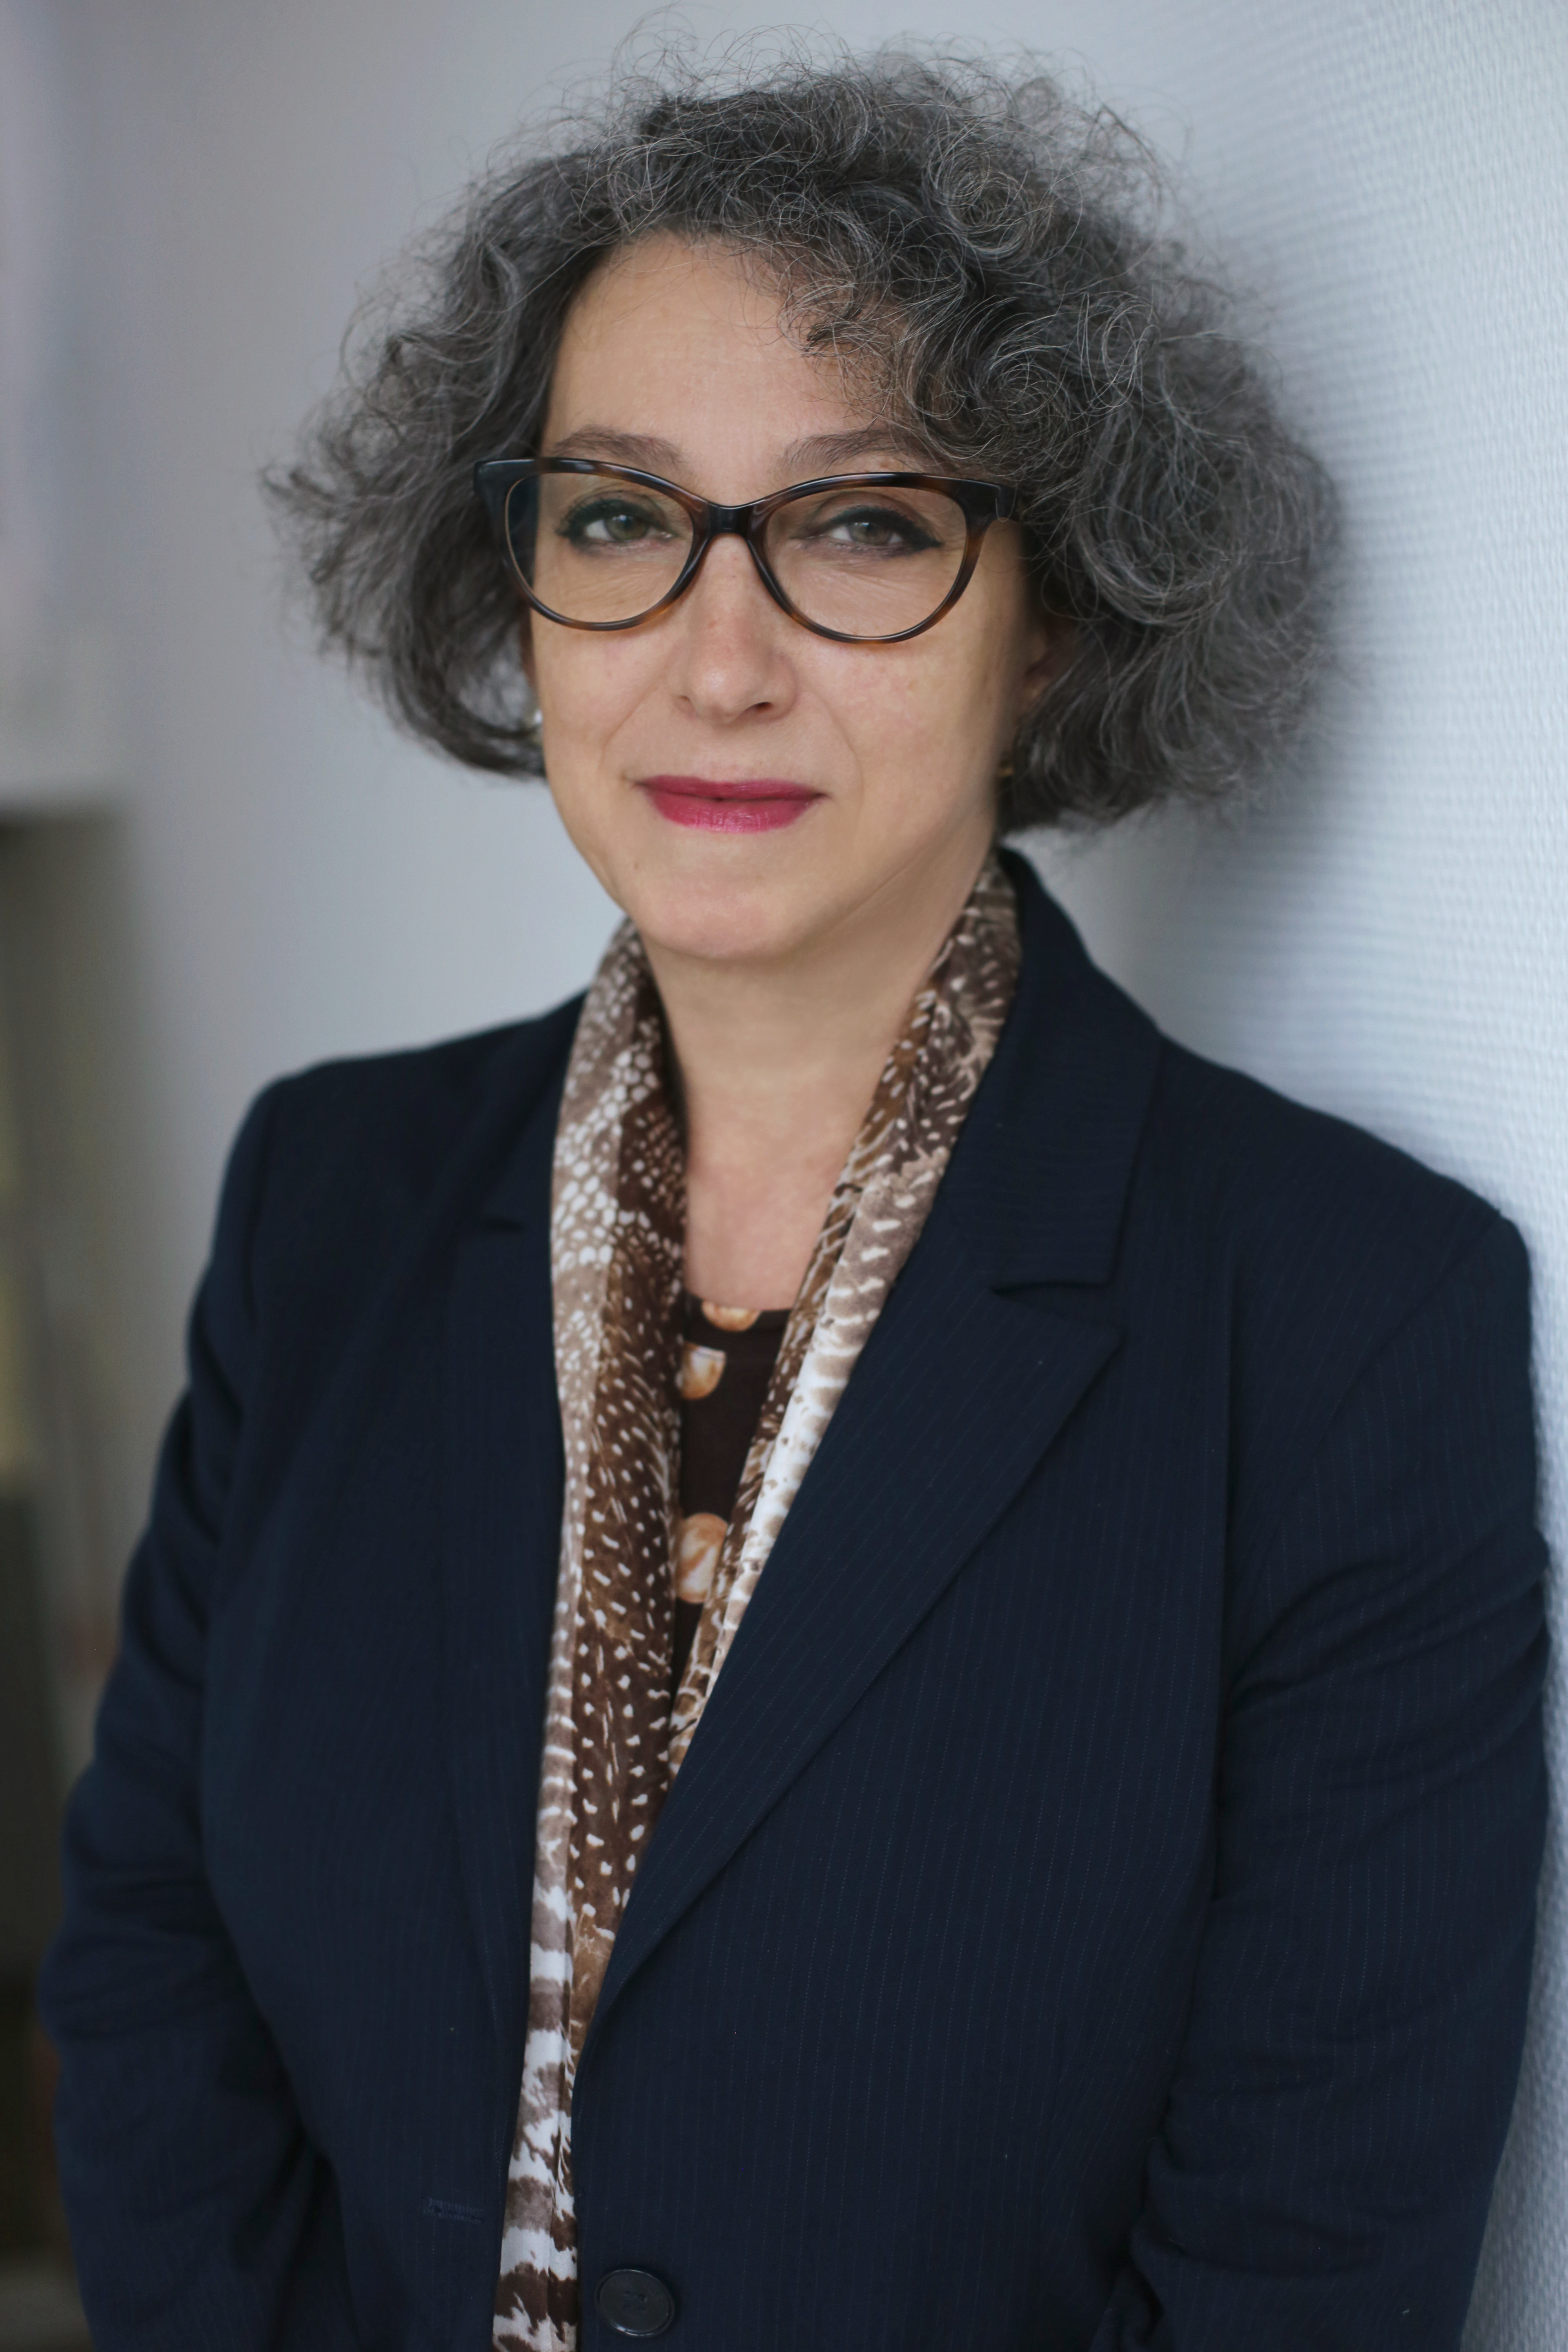 Dr. Patrizia Mazzadi